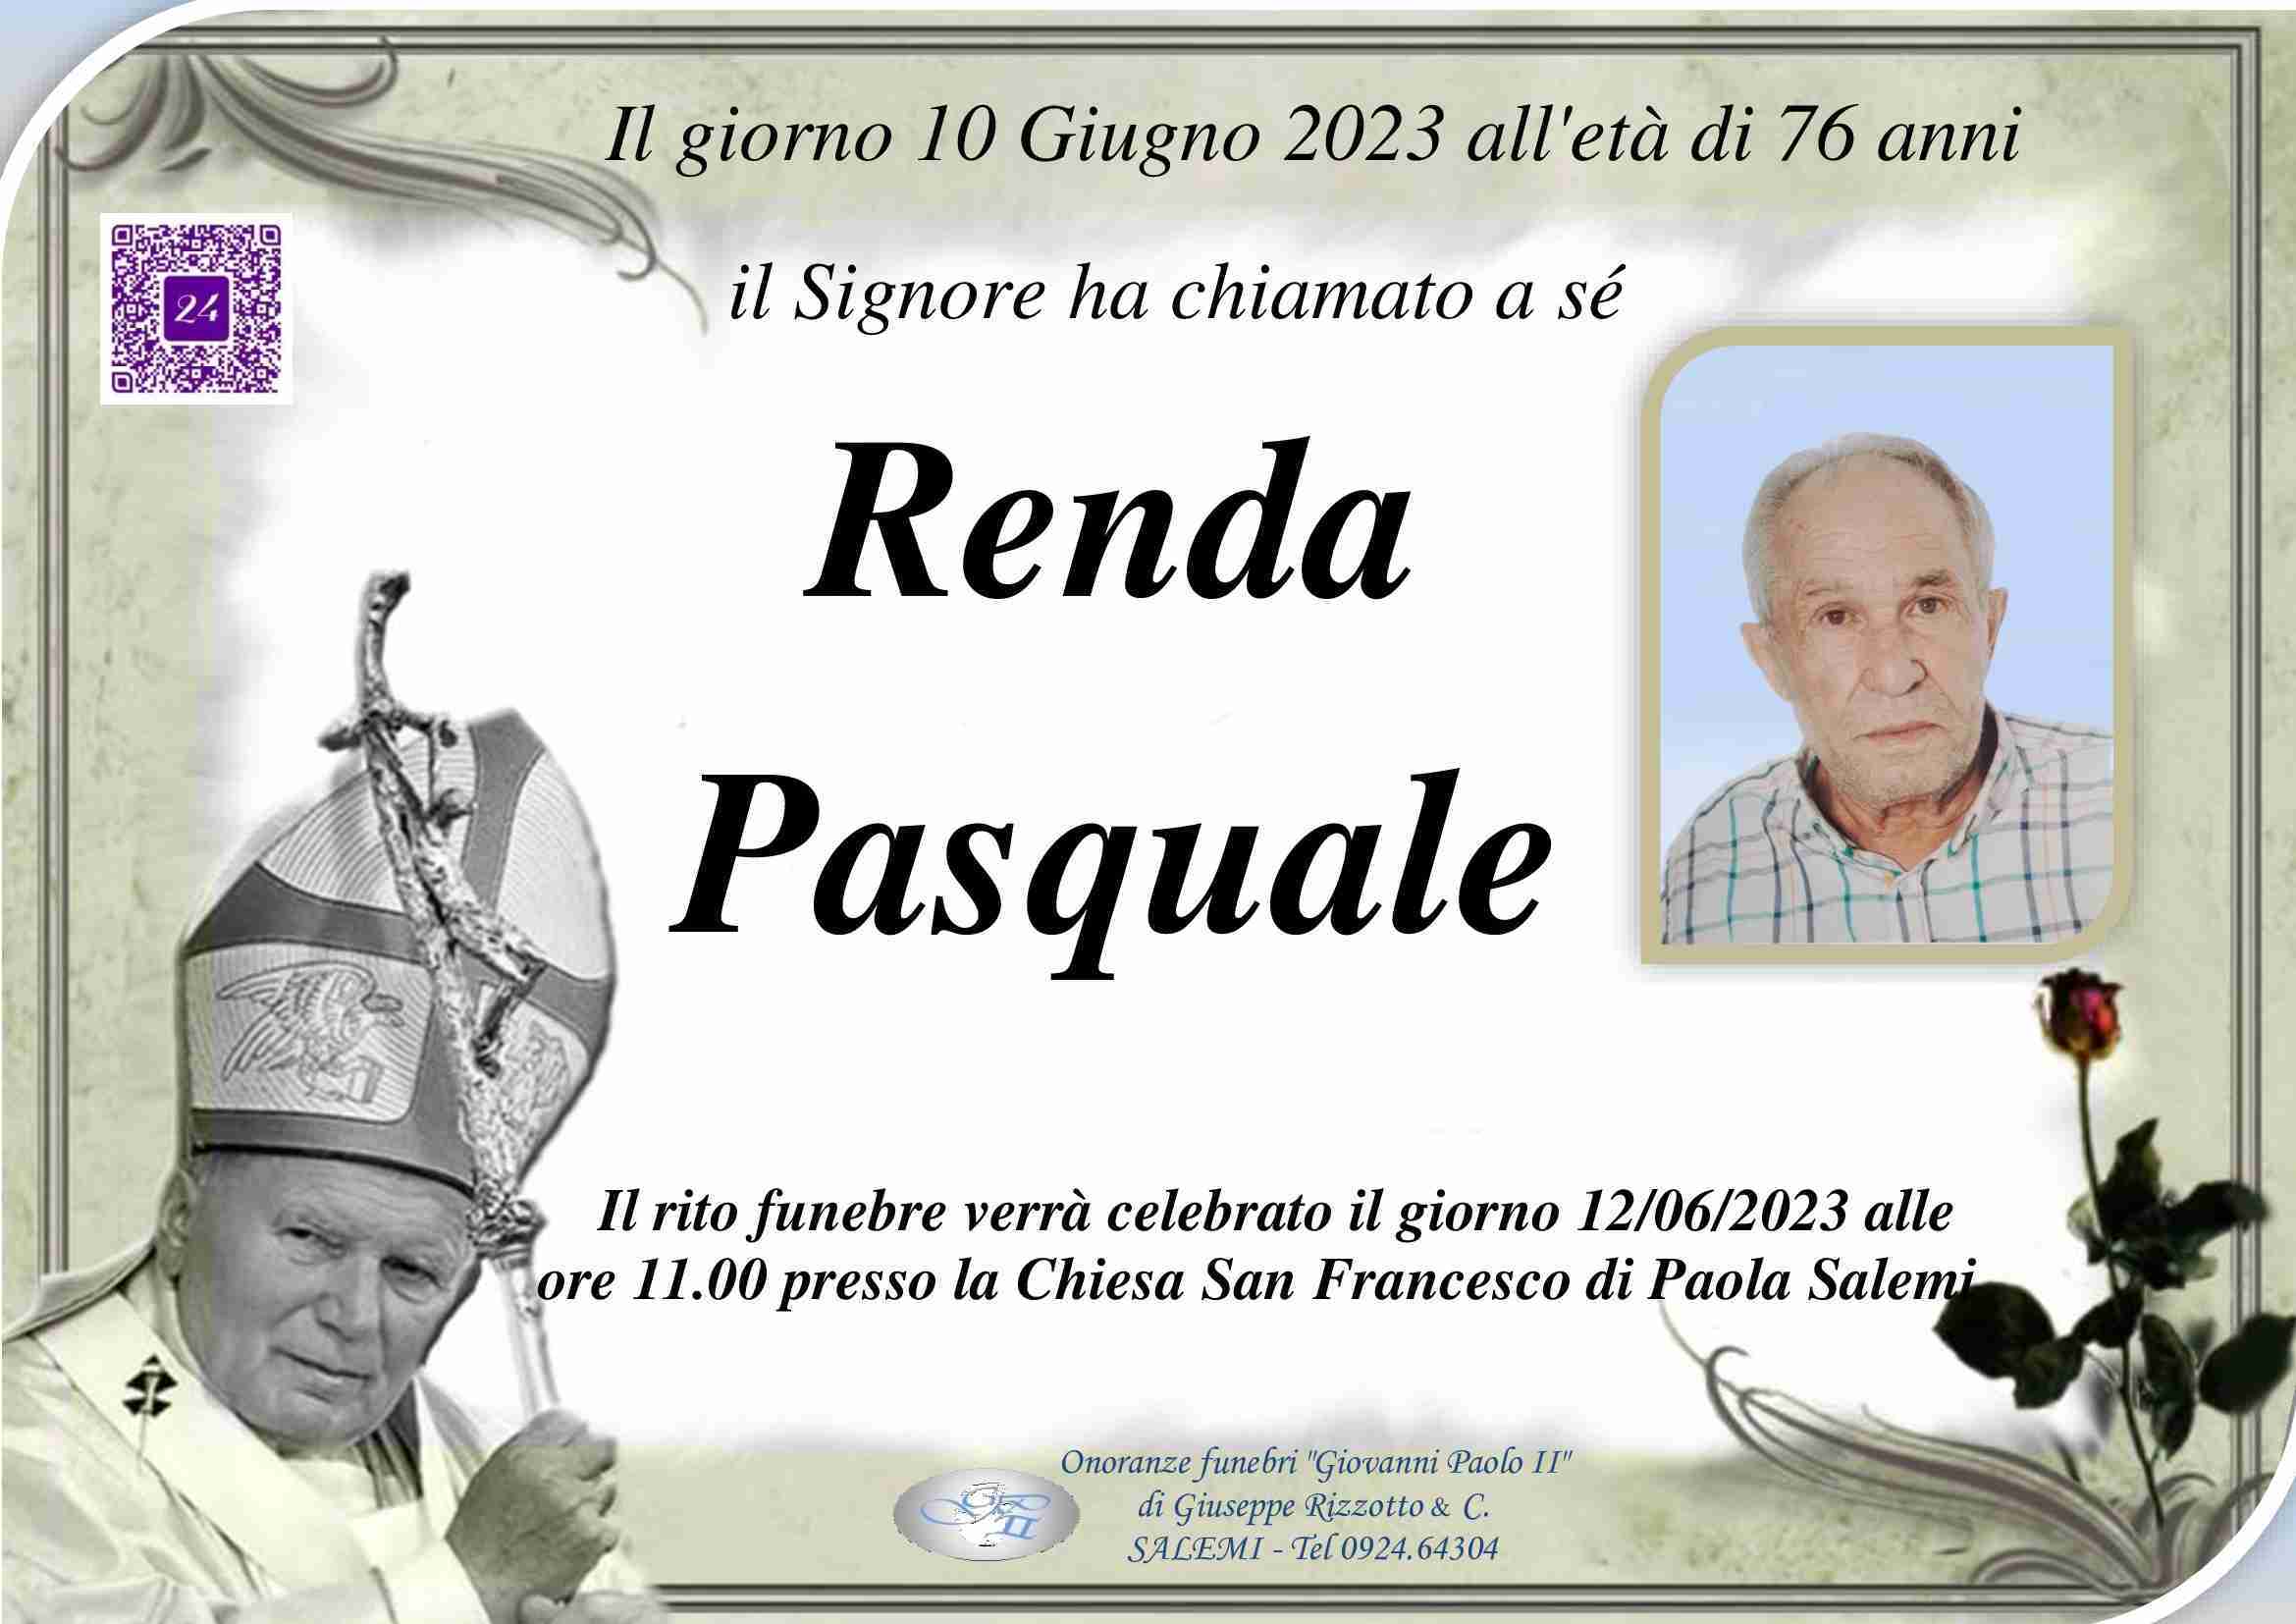 Pasquale Renda